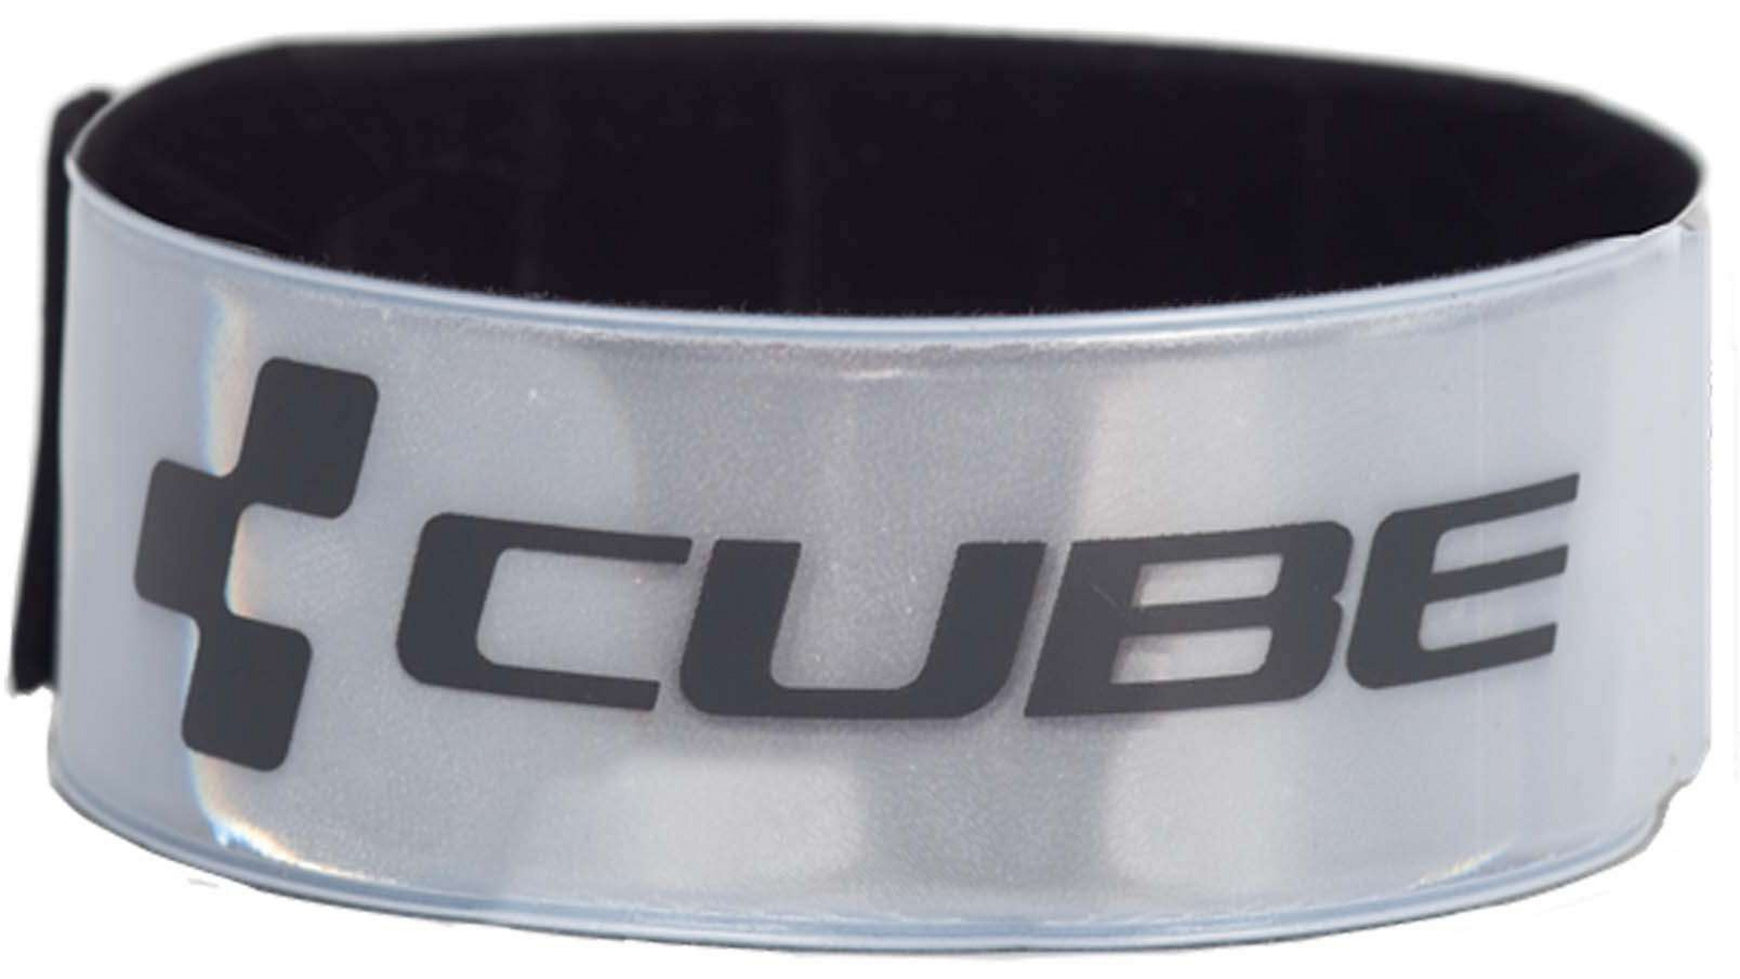 CUBE Snapband von Cube